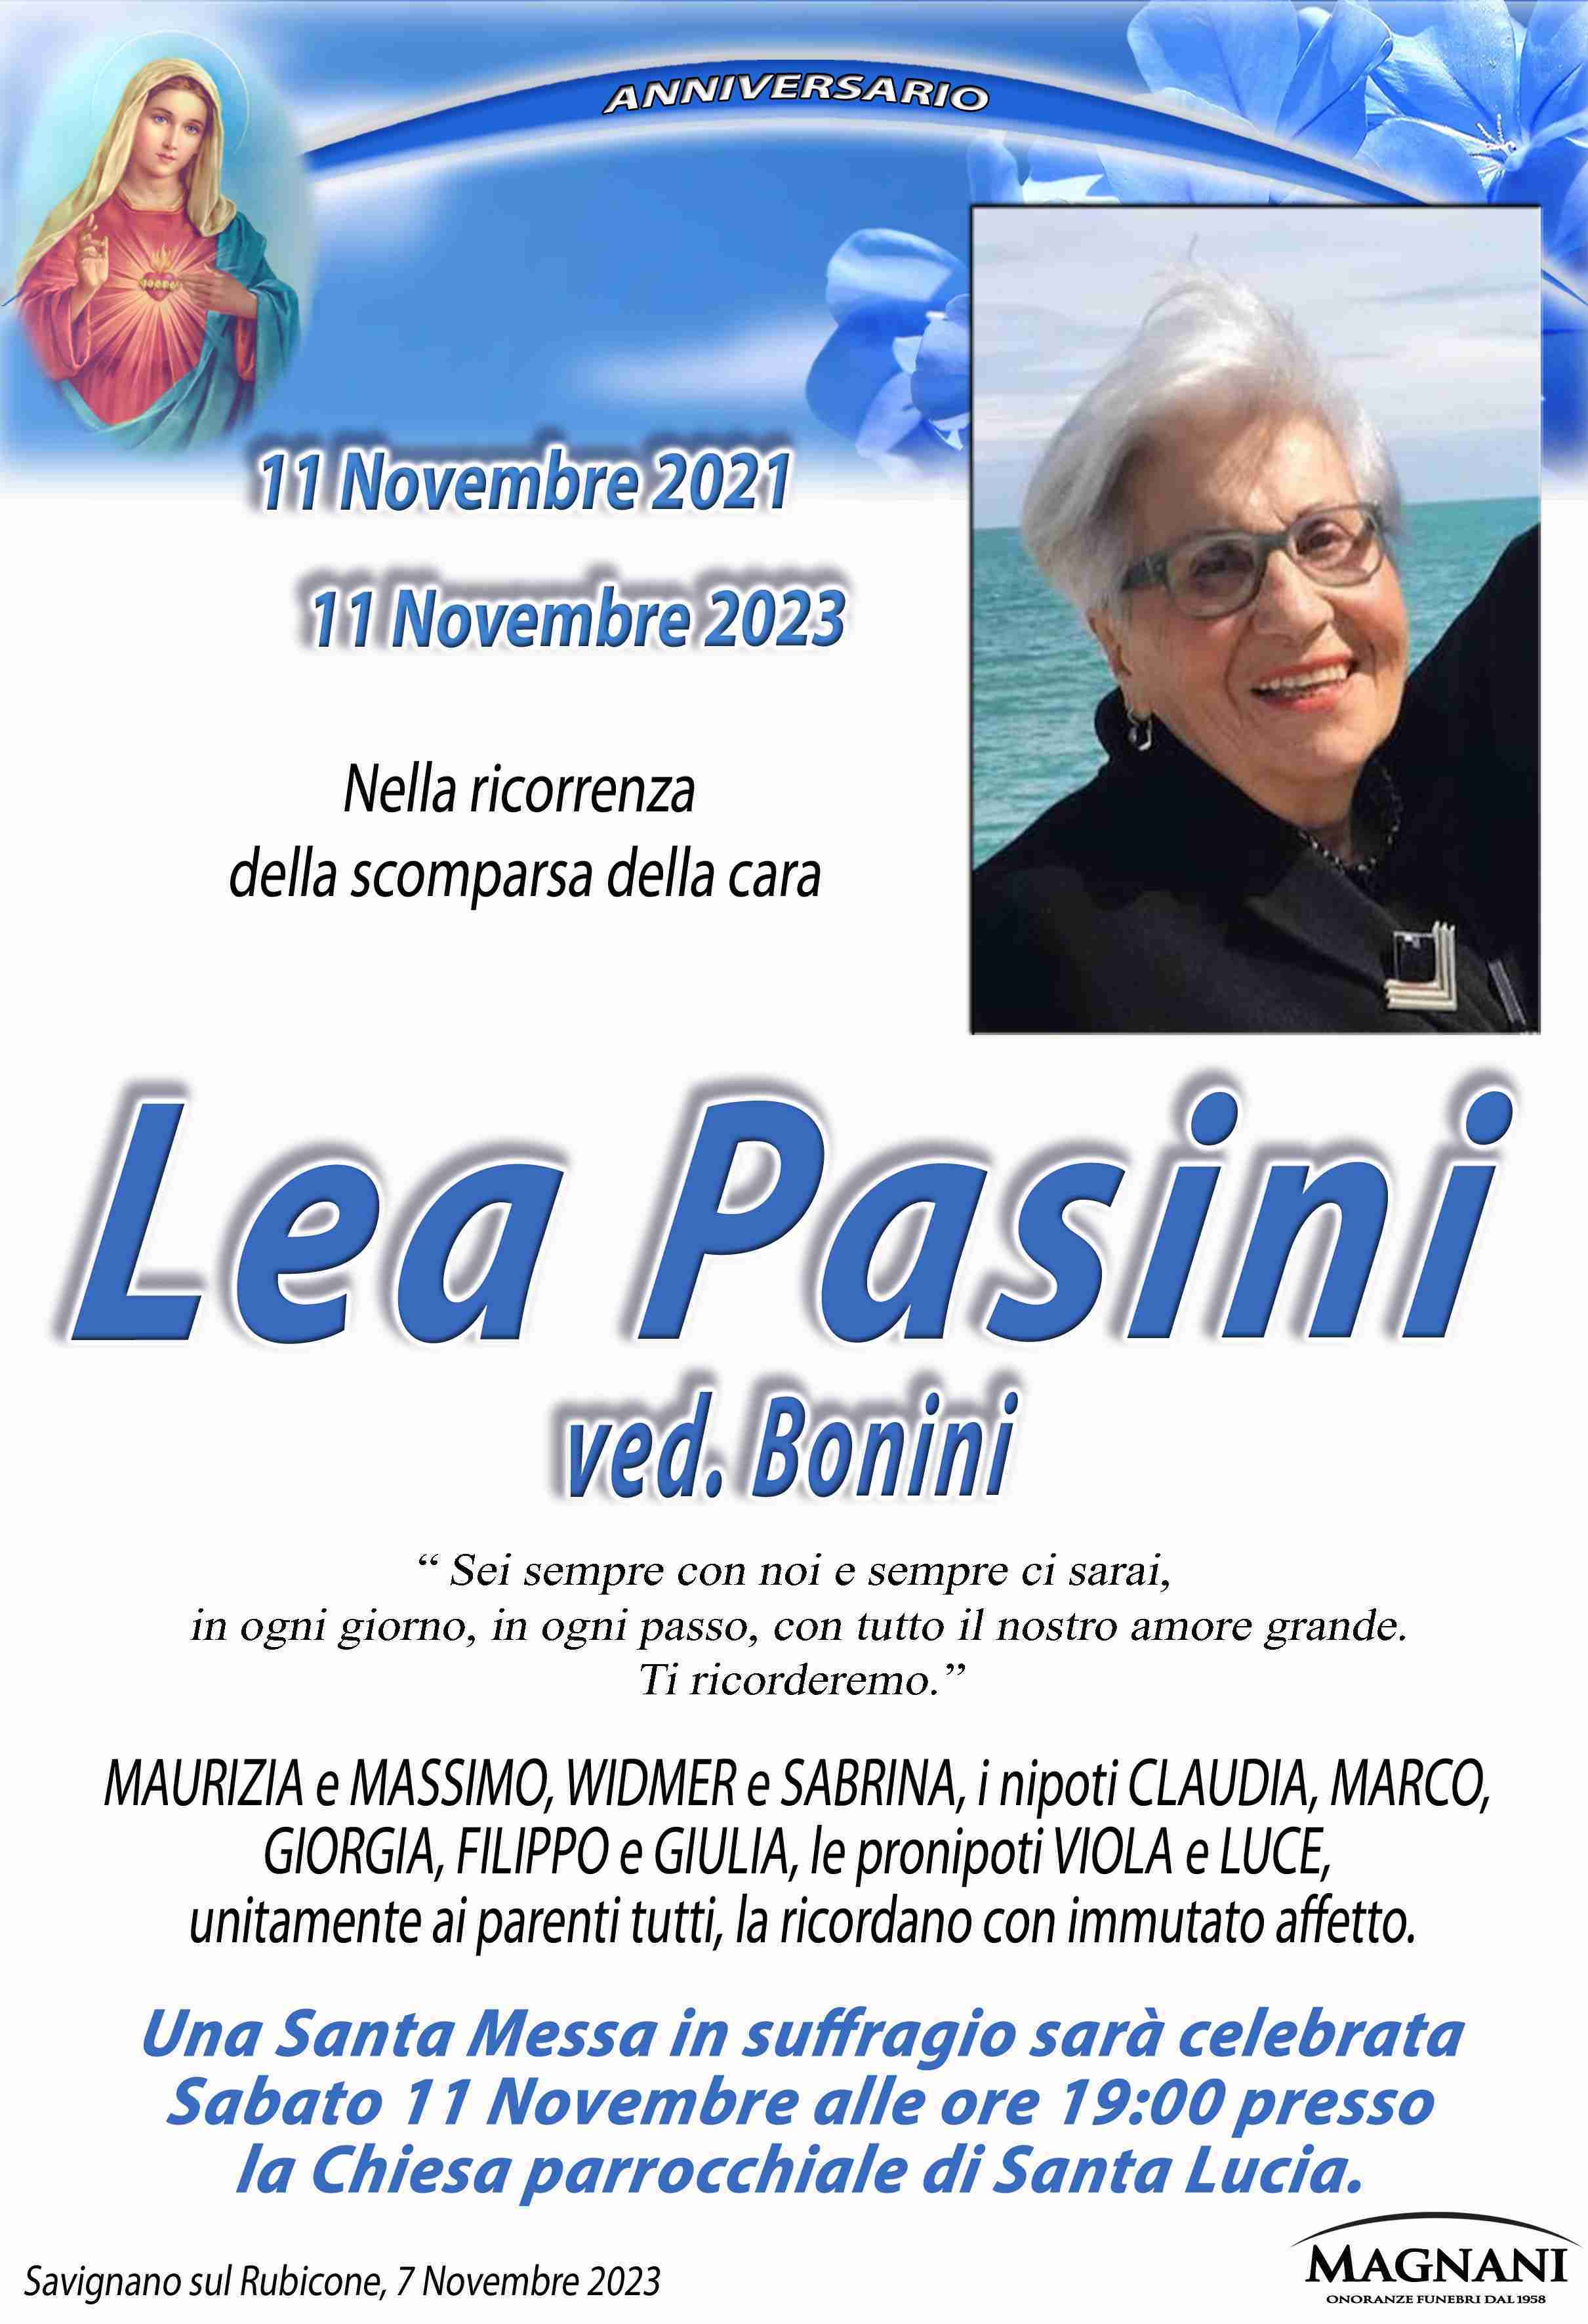 Lea Pasini